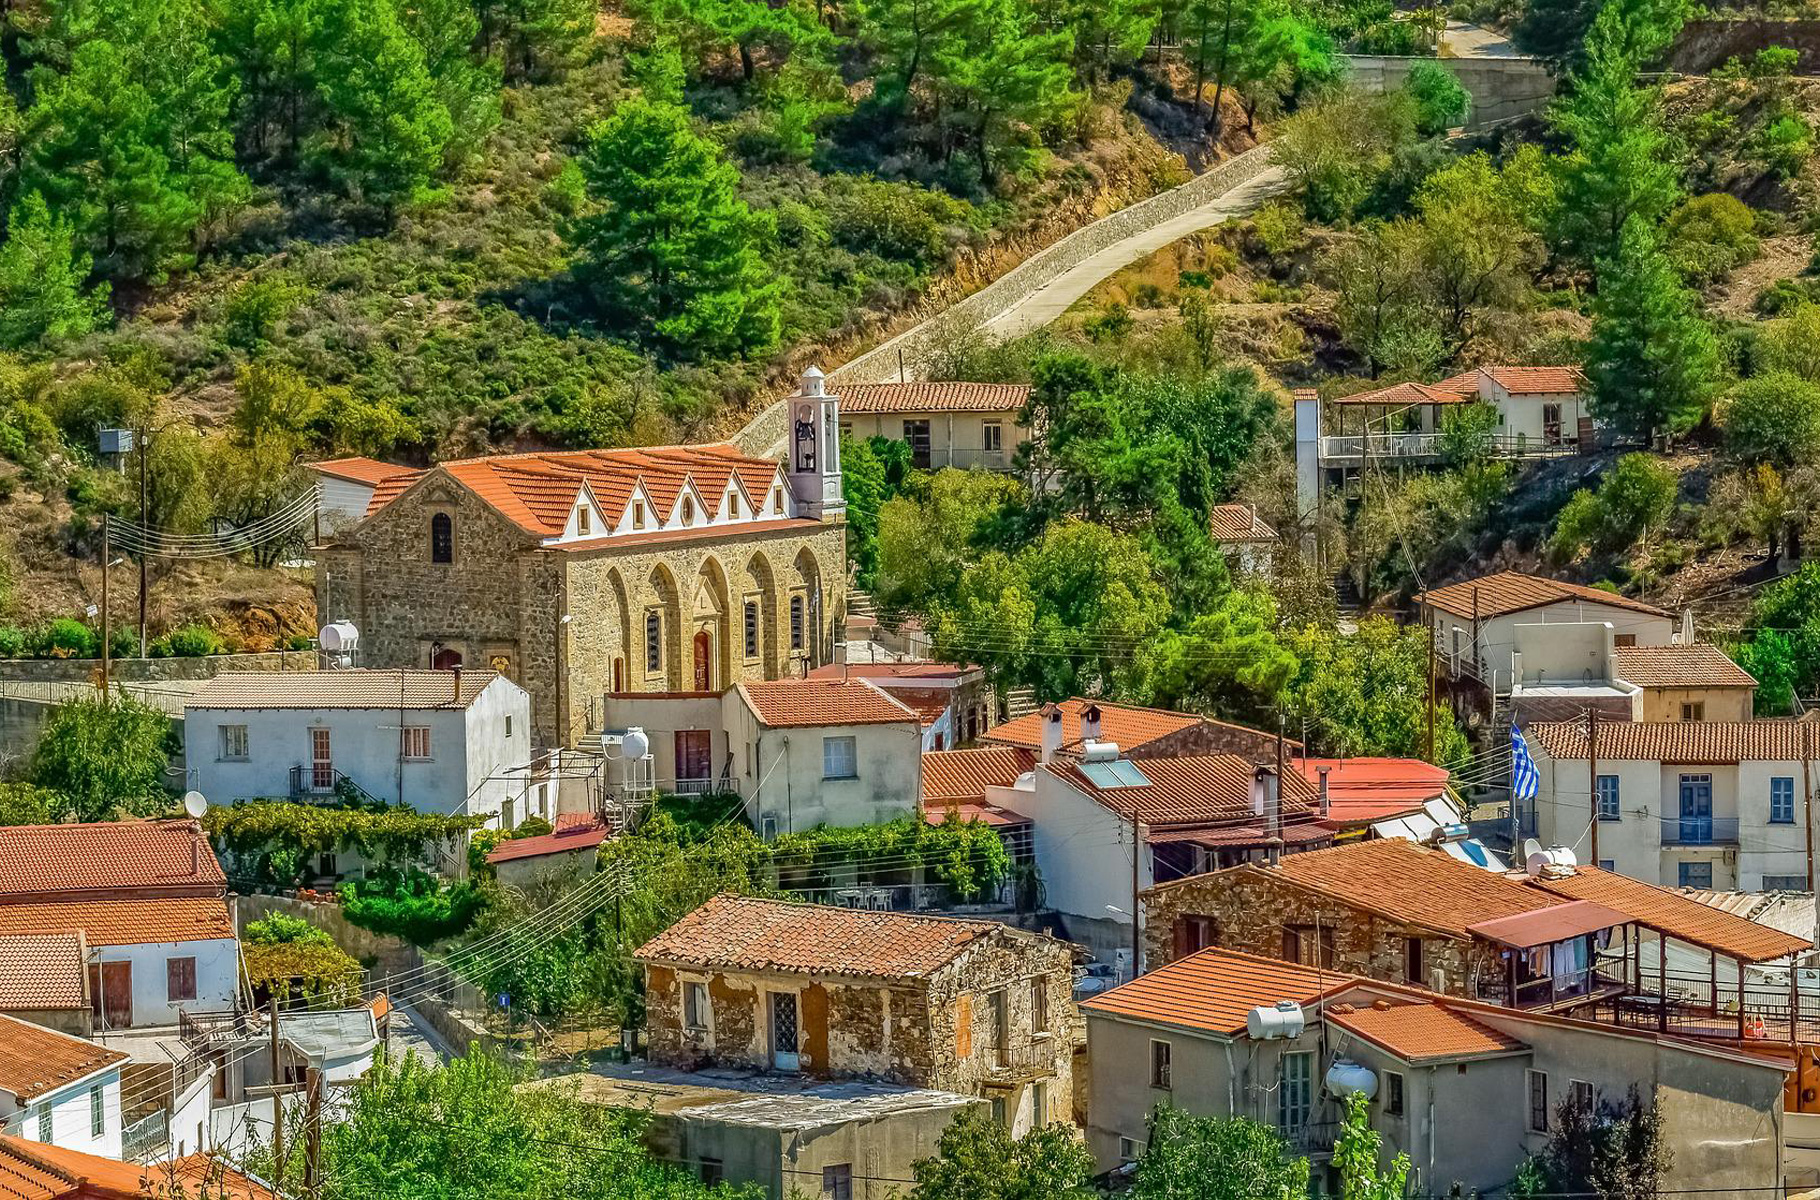 Vavatsinia Village in Cyprus